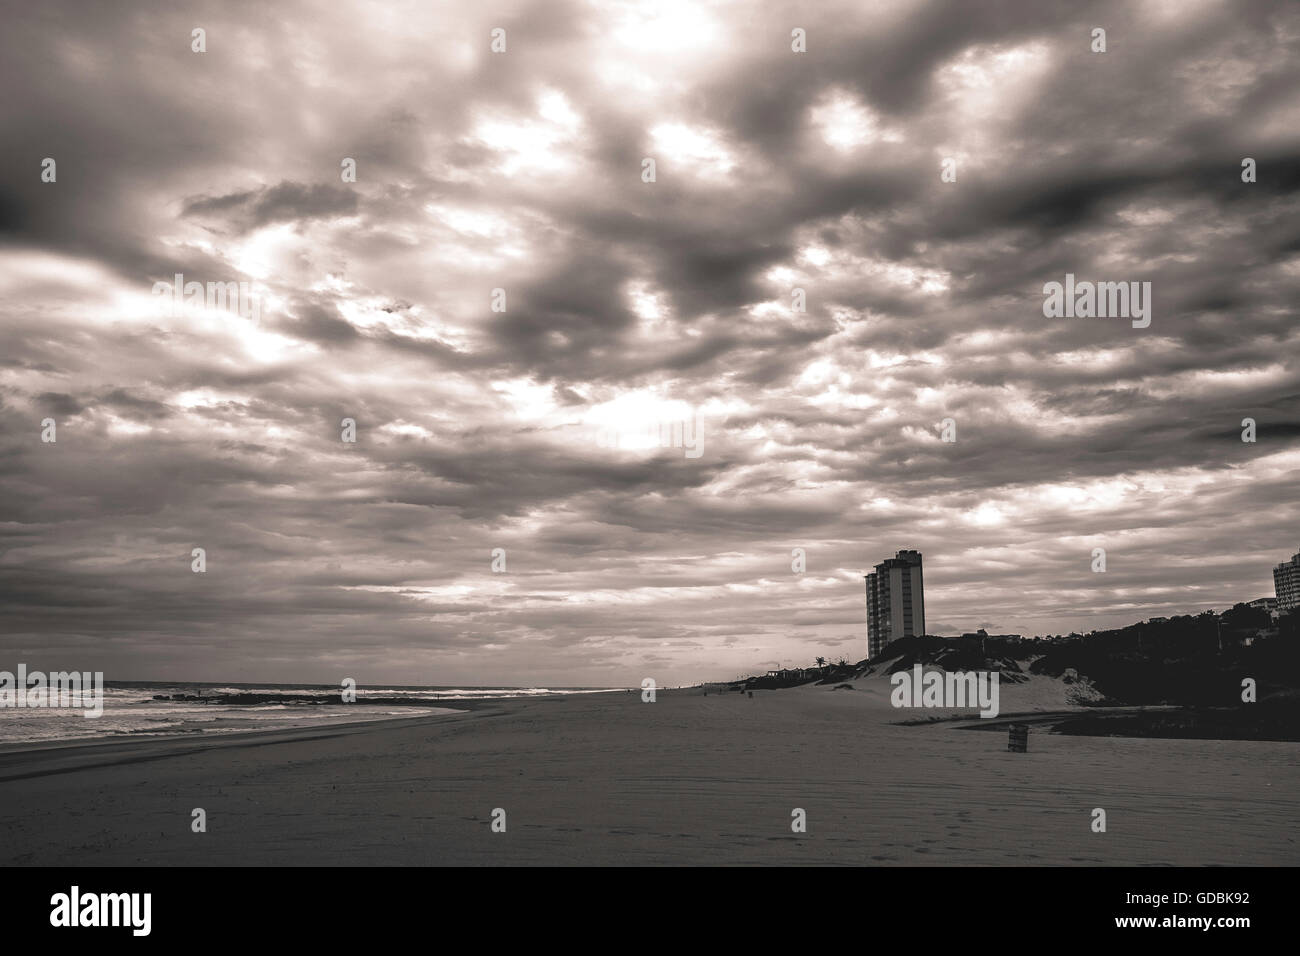 Cloudy skies over Amanzimtoti beach, KZN, South Africa. Stock Photo